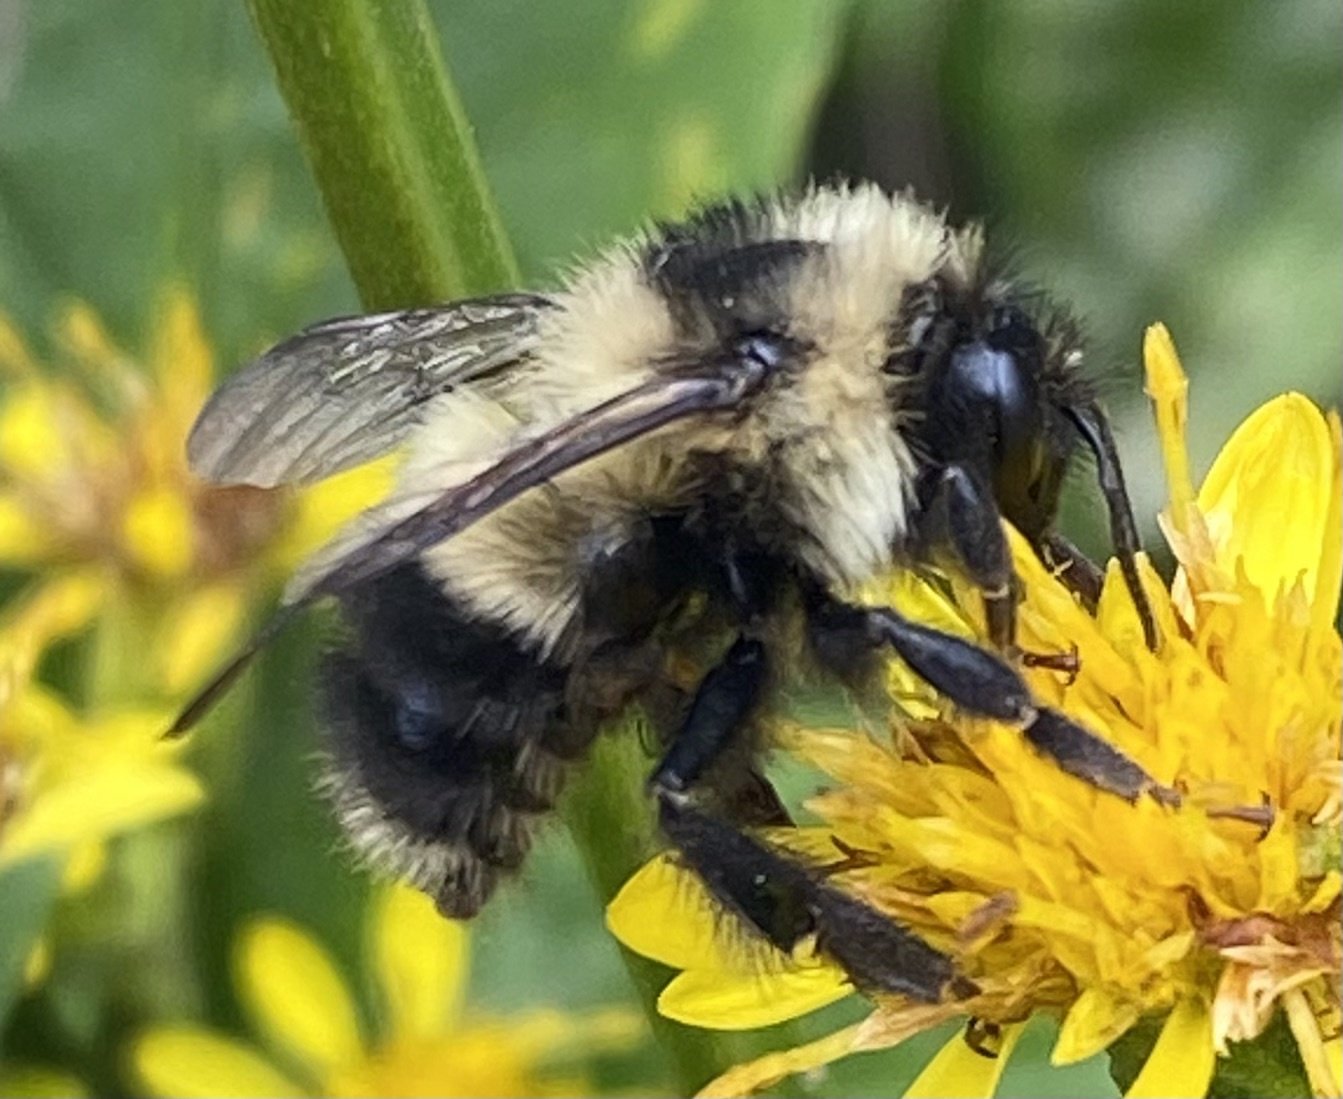 B sandersoni, a/k/a Sanderson's Bumble Bee